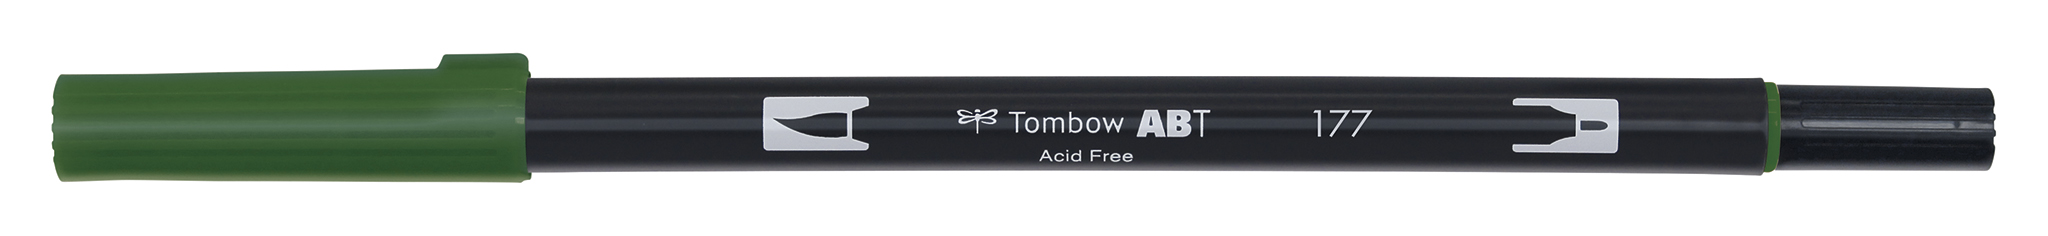 Tombow Art Brush Pen, dark jade